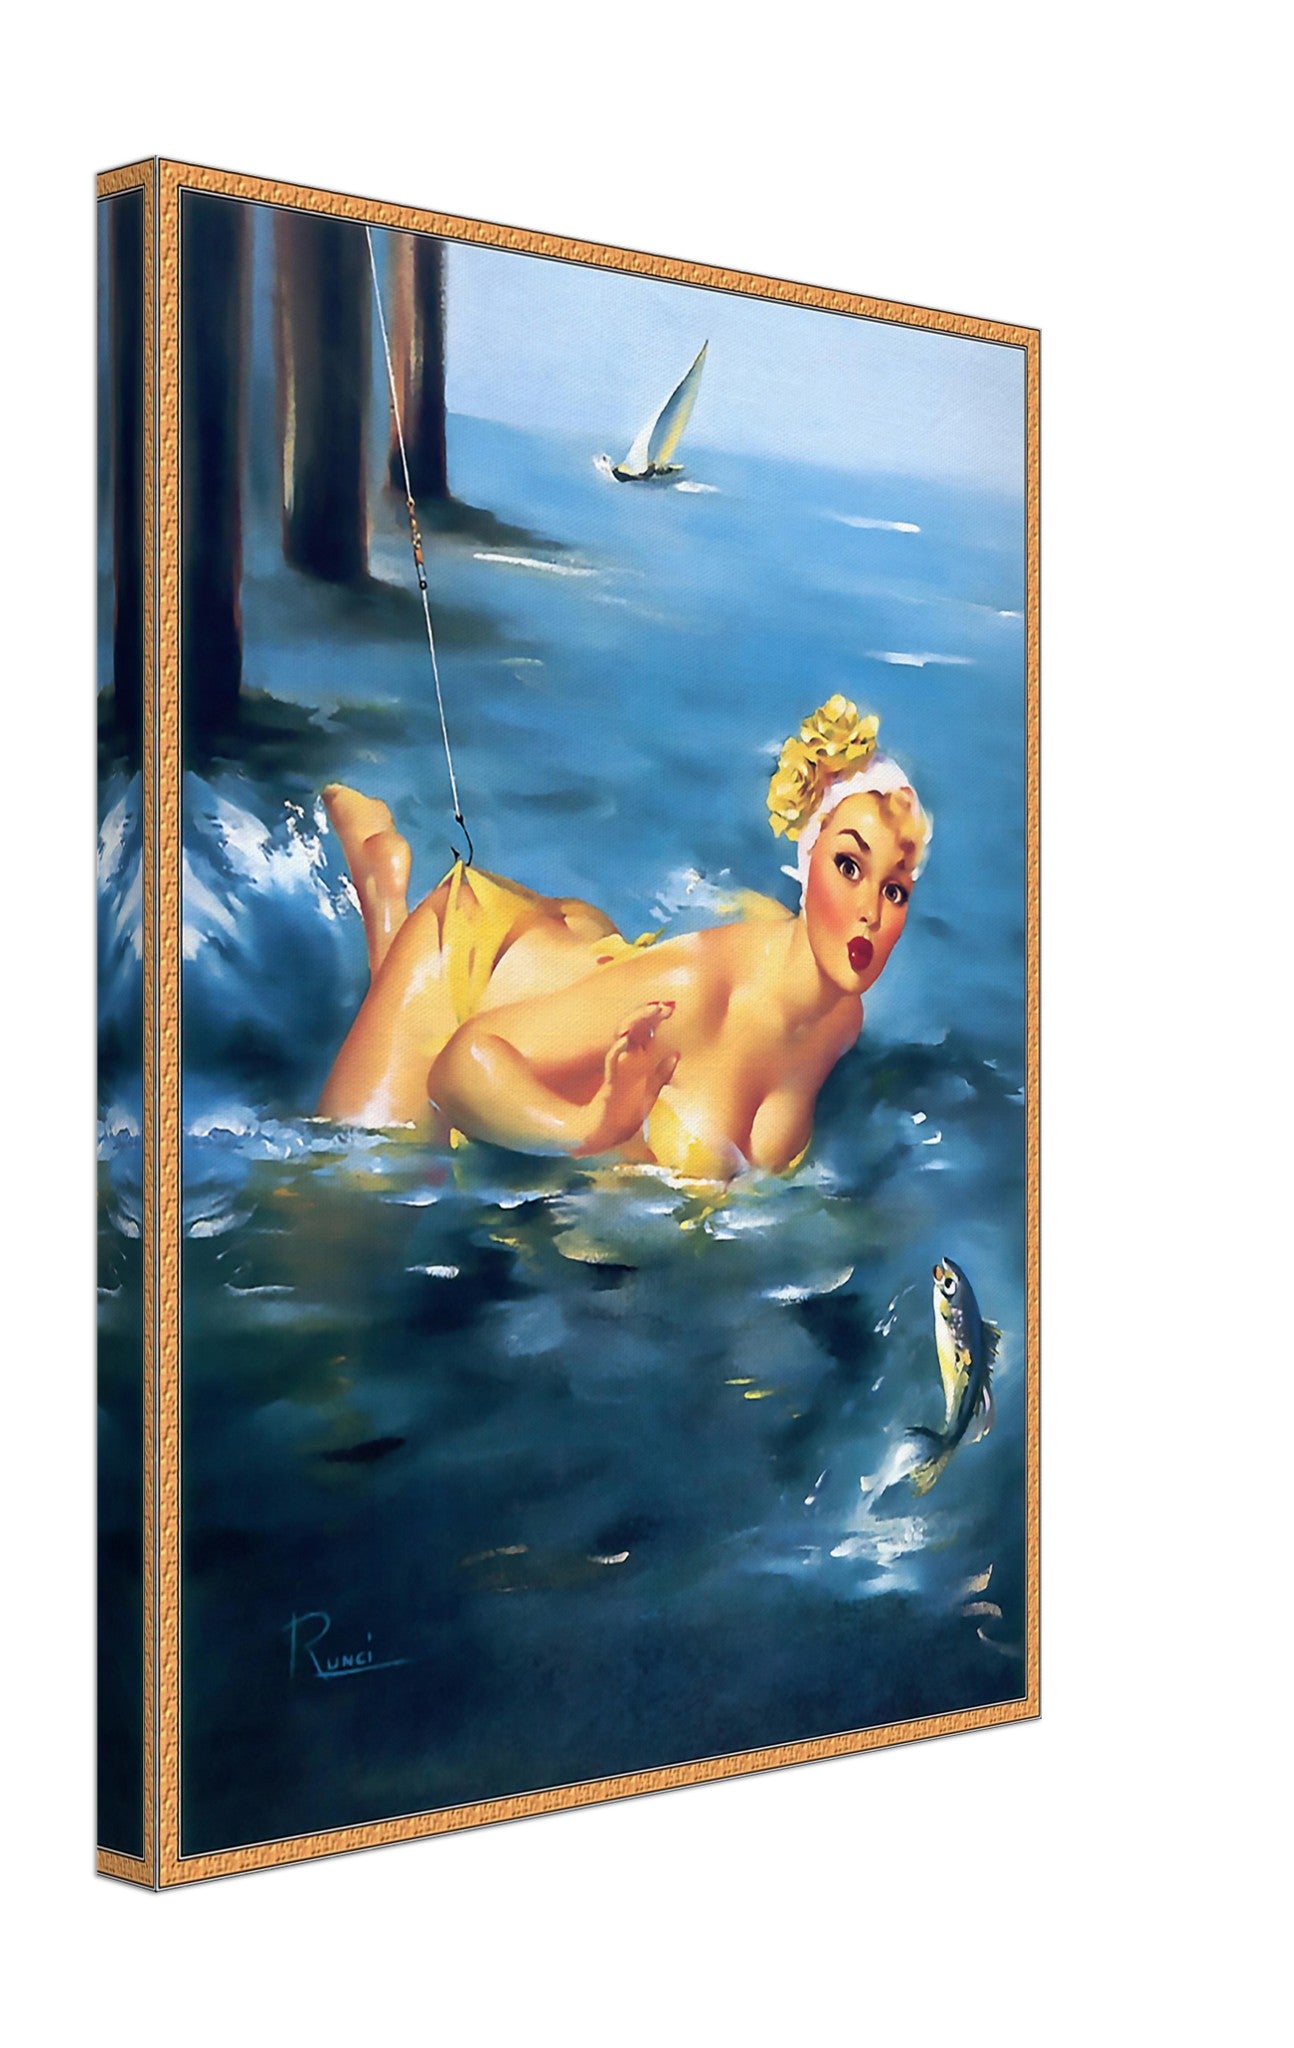 Vintage Pin Up Girl Canvas, Yellow Bikini, Edward Runci - Vintage Art - Retro Pin Up Girl Canvas Print - Late 1940'S - 1950'S - WallArtPrints4U